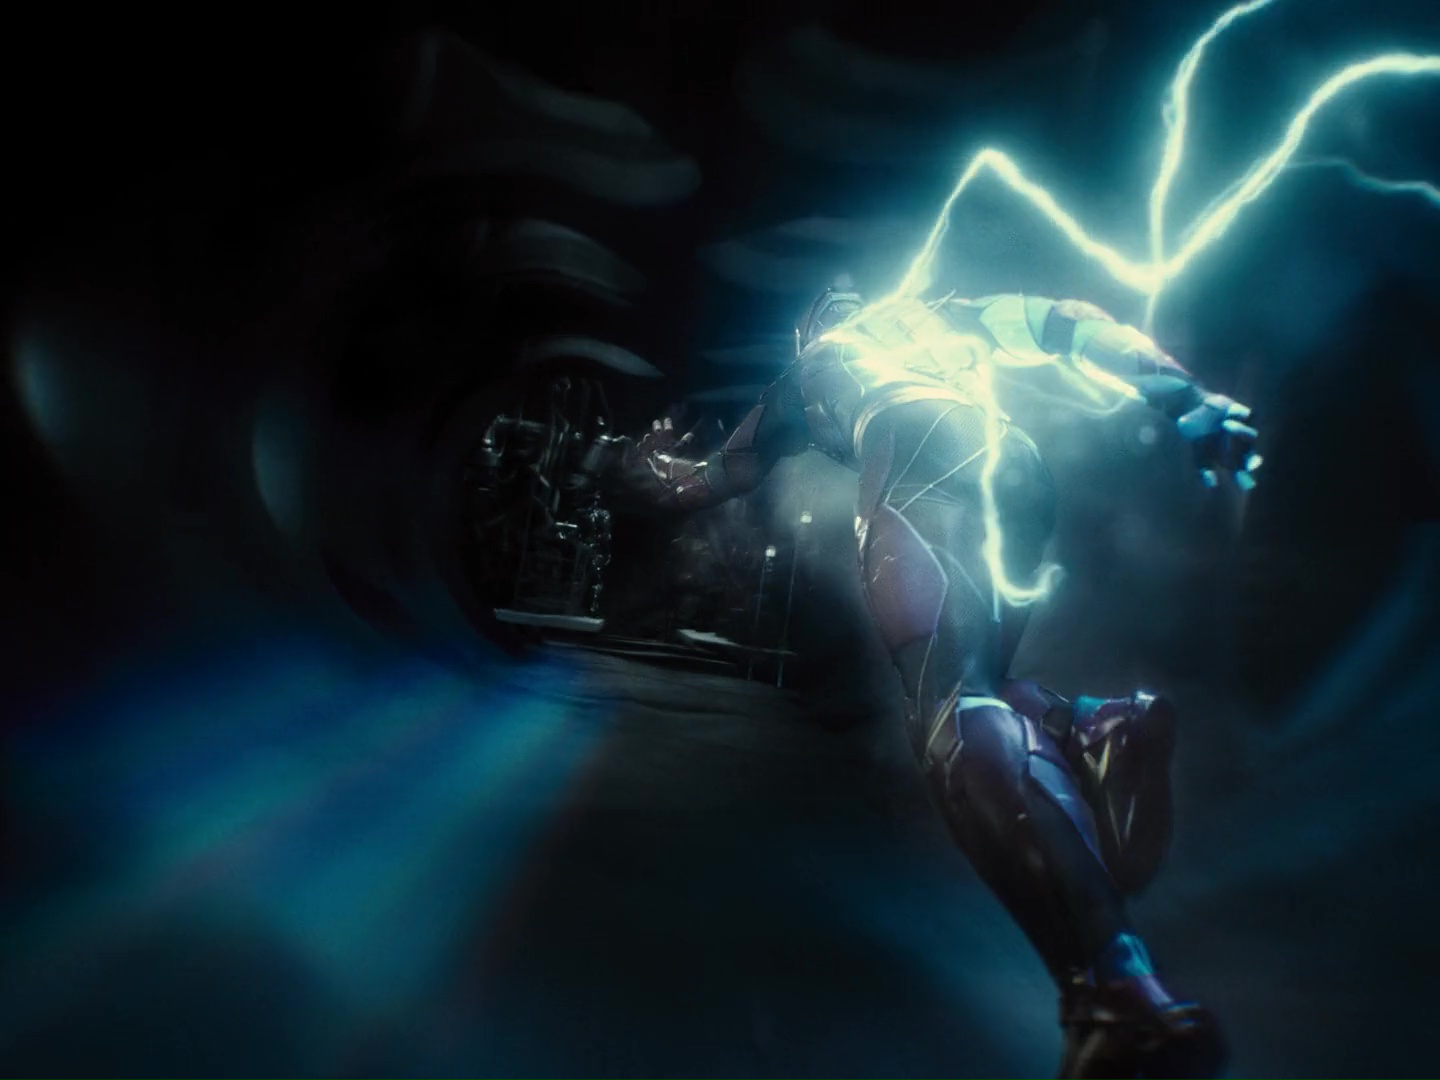 Flash Zack Snyders Justice League Digital Lighting Lightning 1440x1080